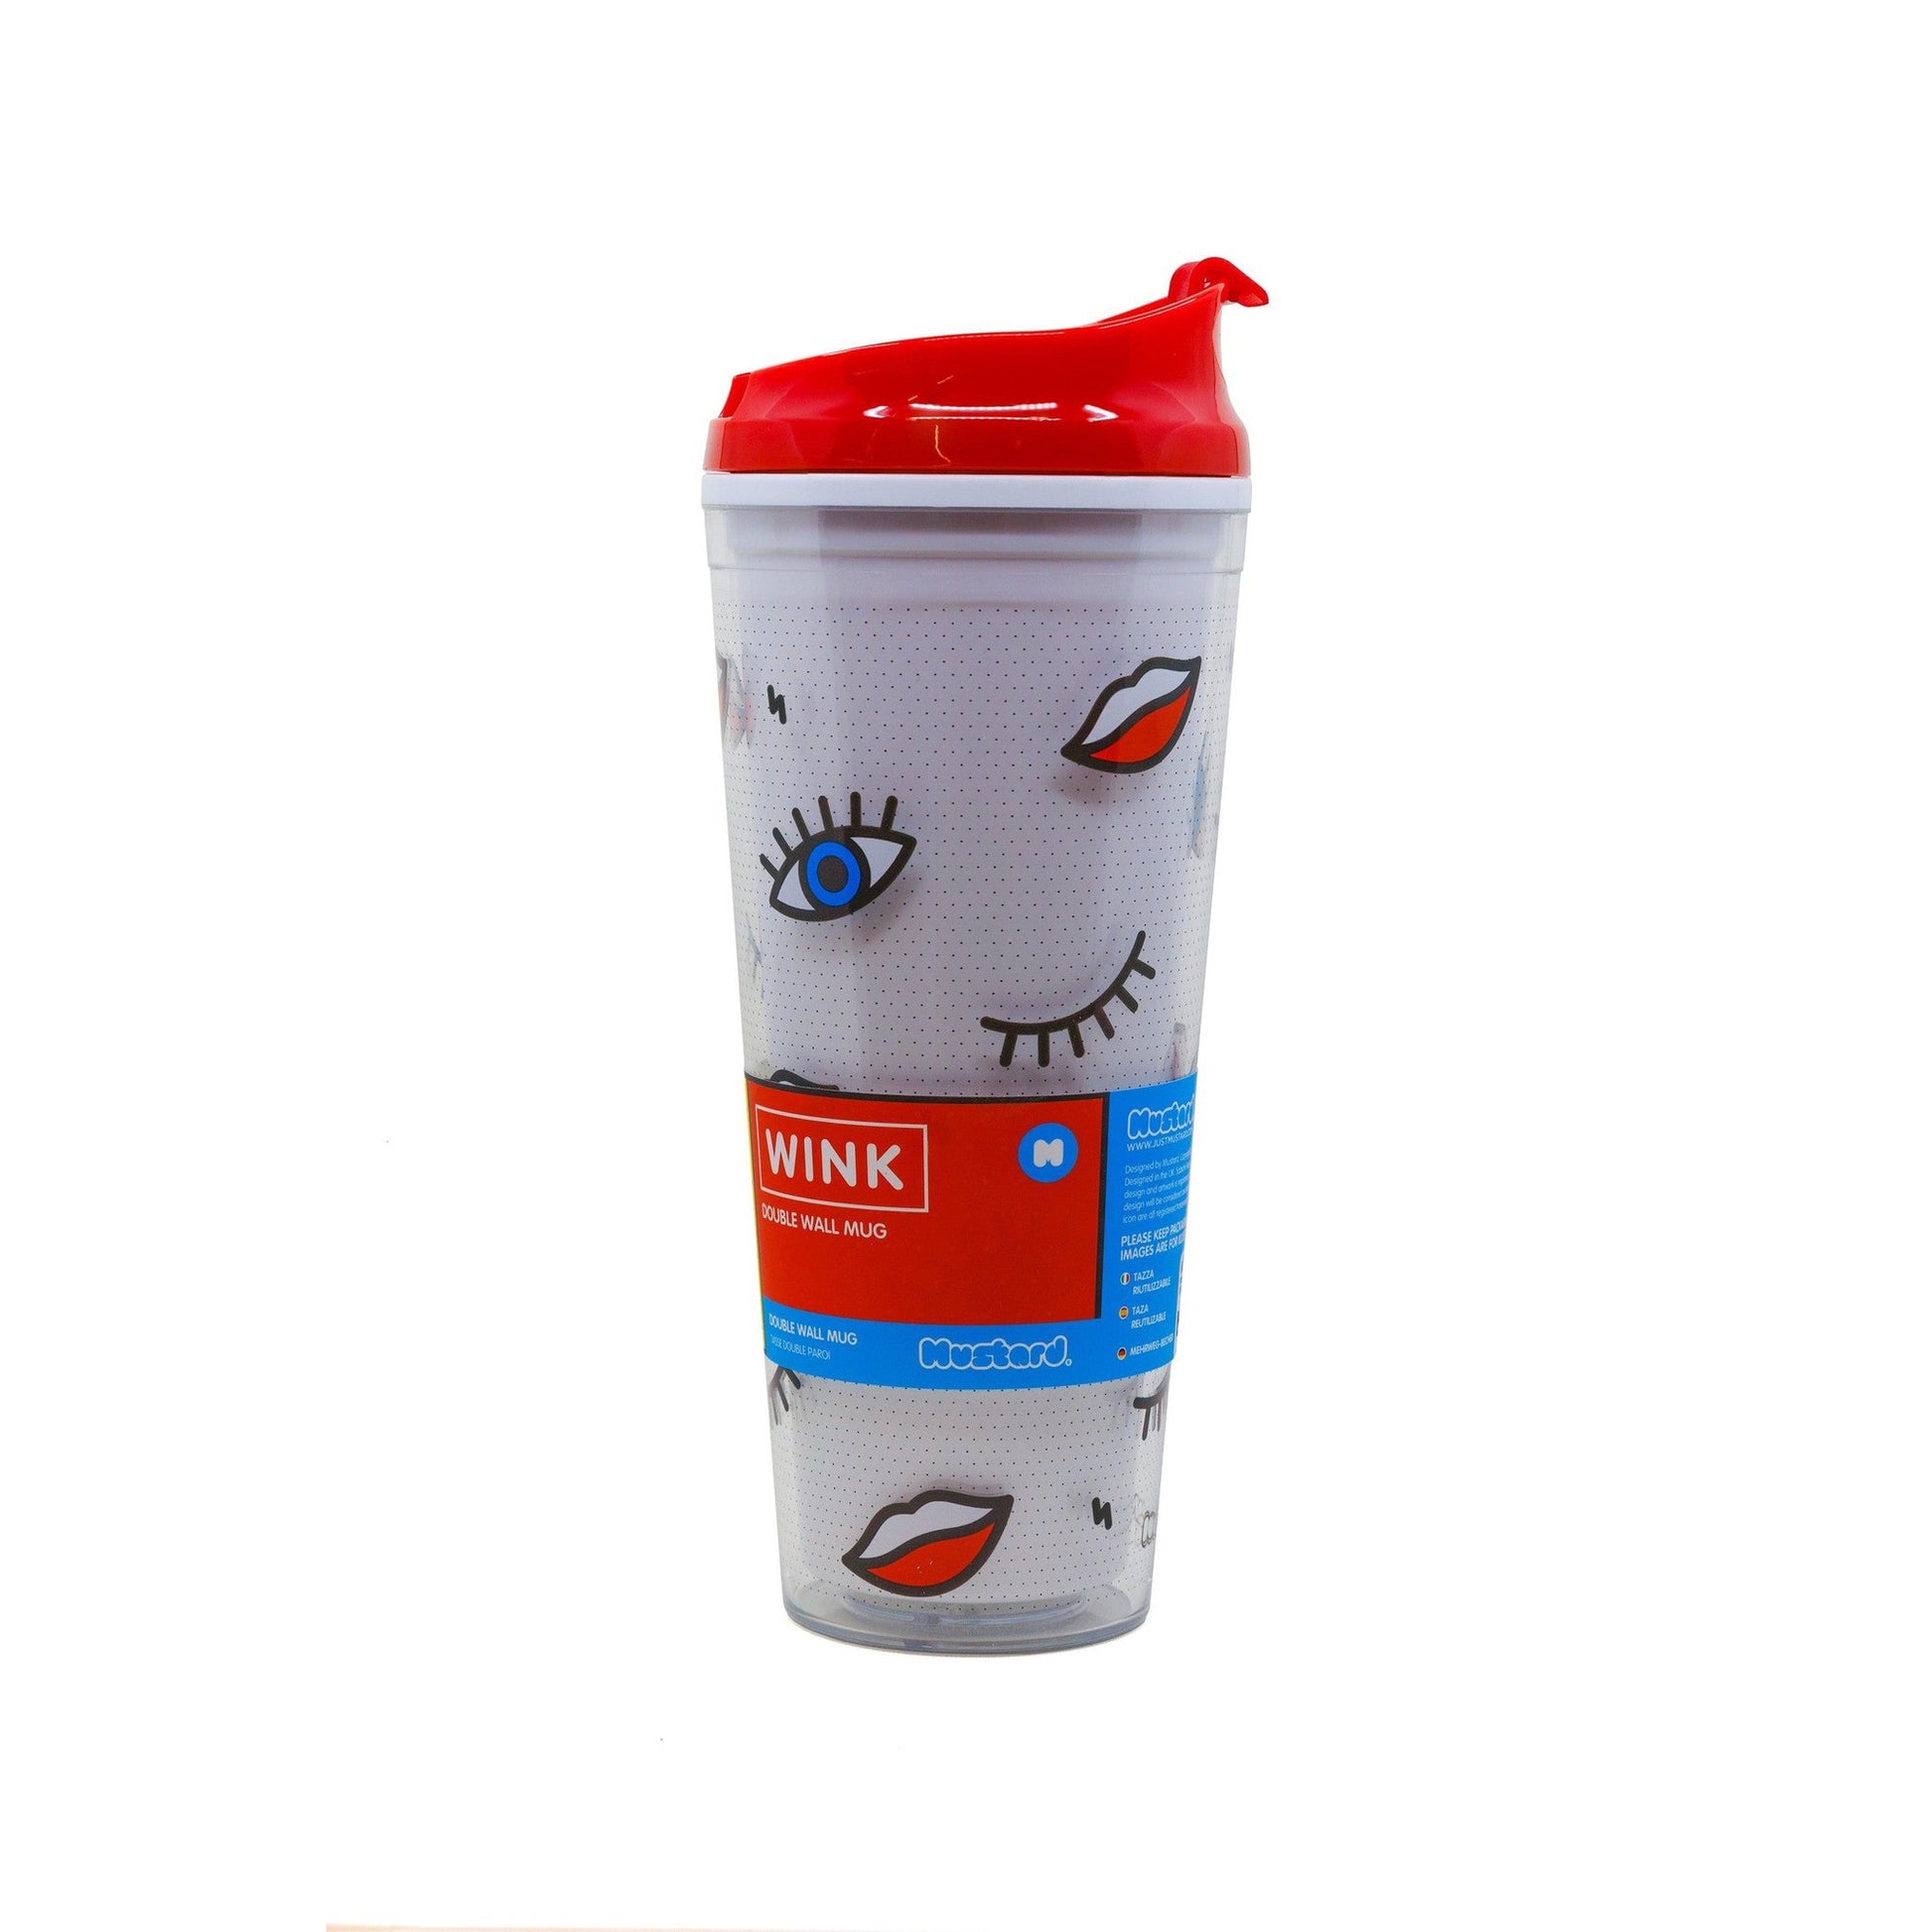 Wink Double Wall Mug Coffee Tumbler | Mod Style | BPA-Free